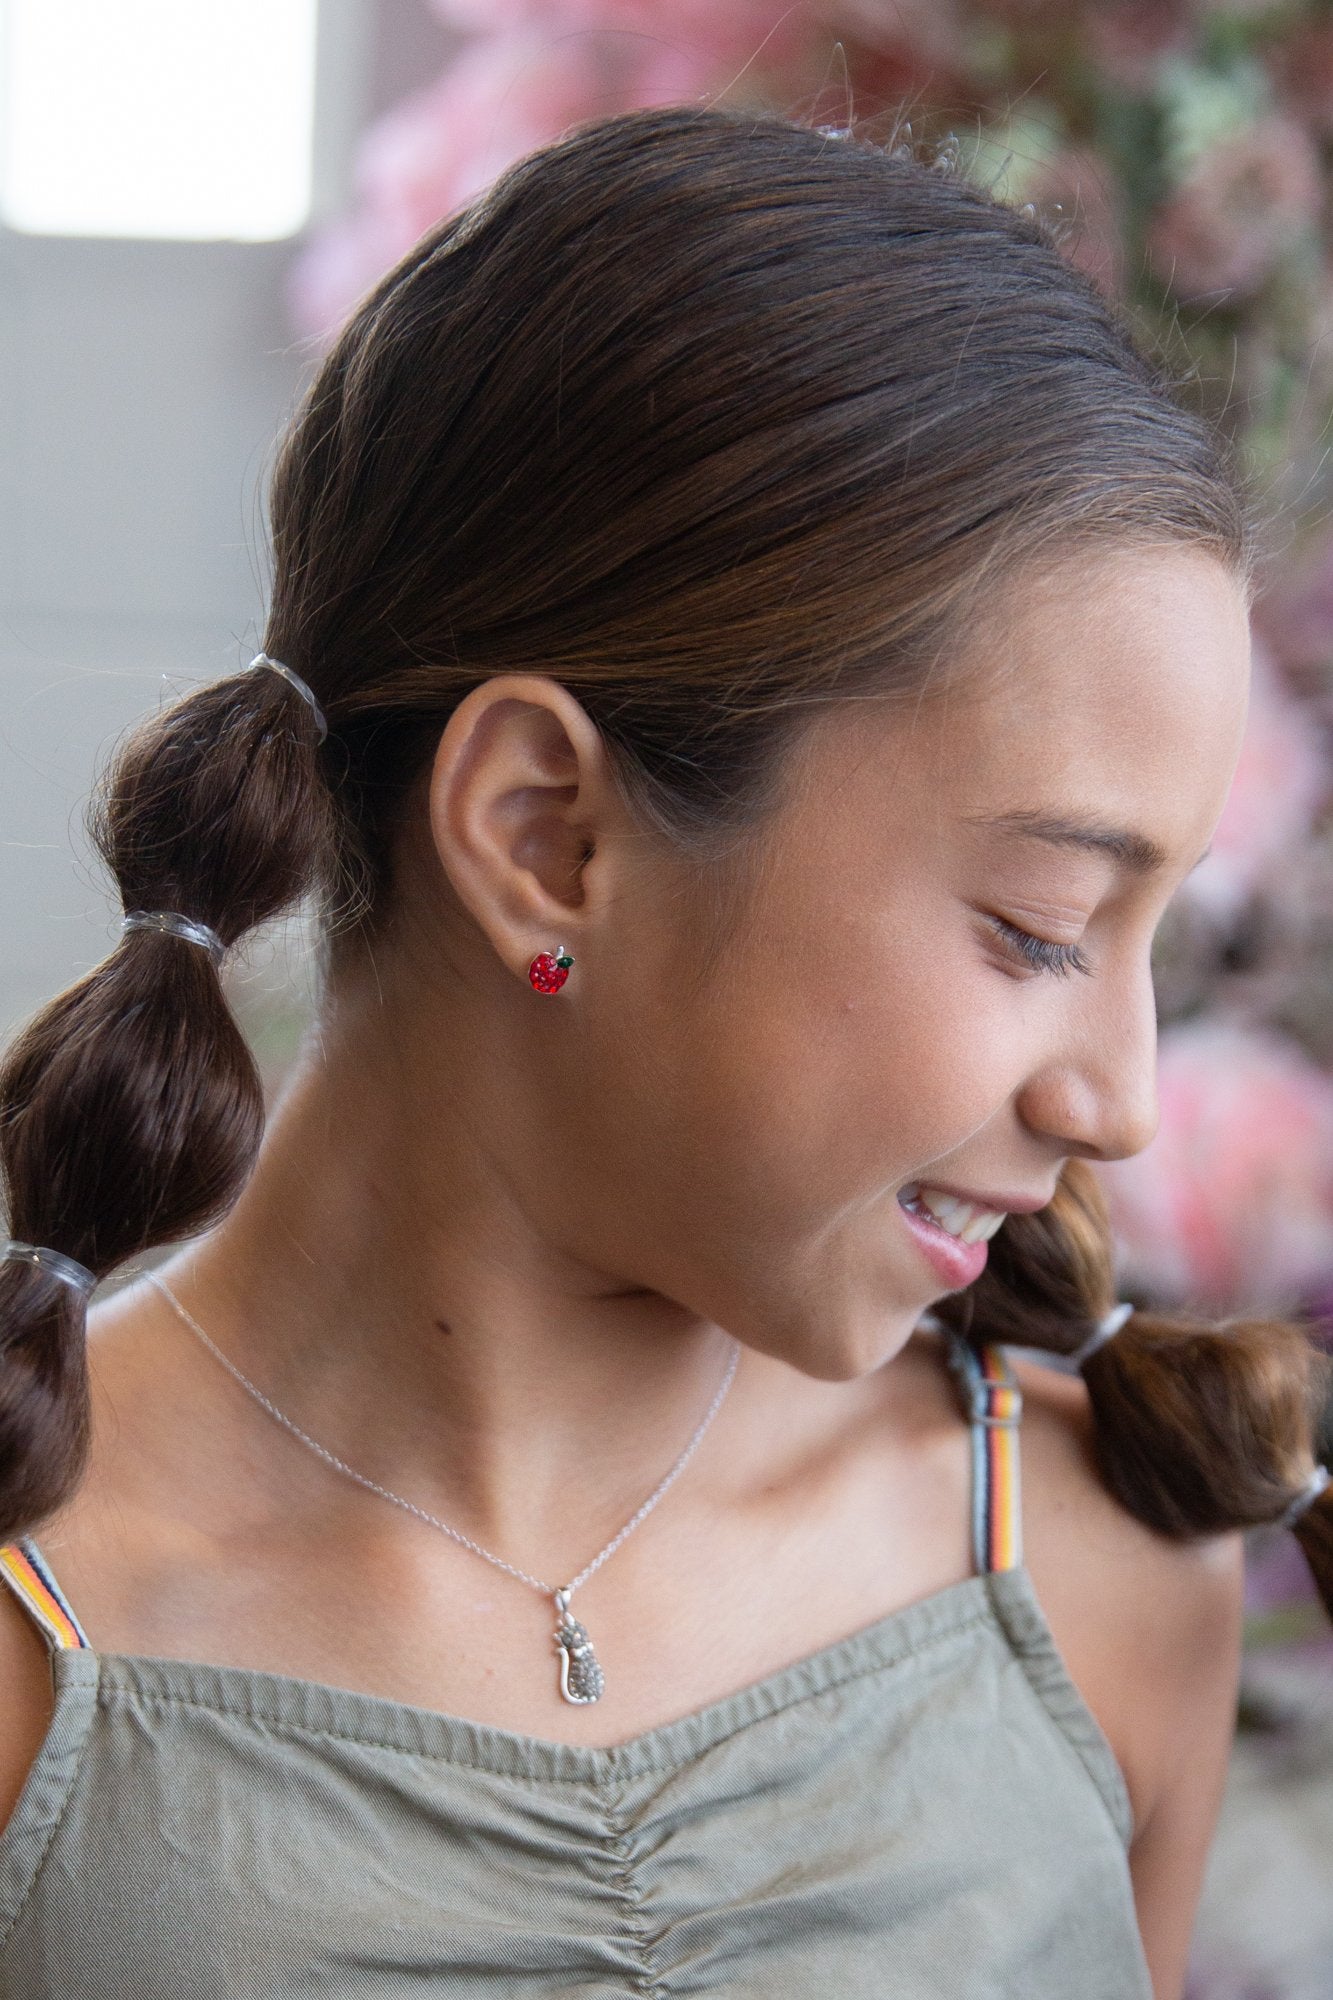 Apple Stud Sterling Silver Earrings | Annie and Sisters | sister stud earrings, for kids, children's jewelry, kid's jewelry, best friend